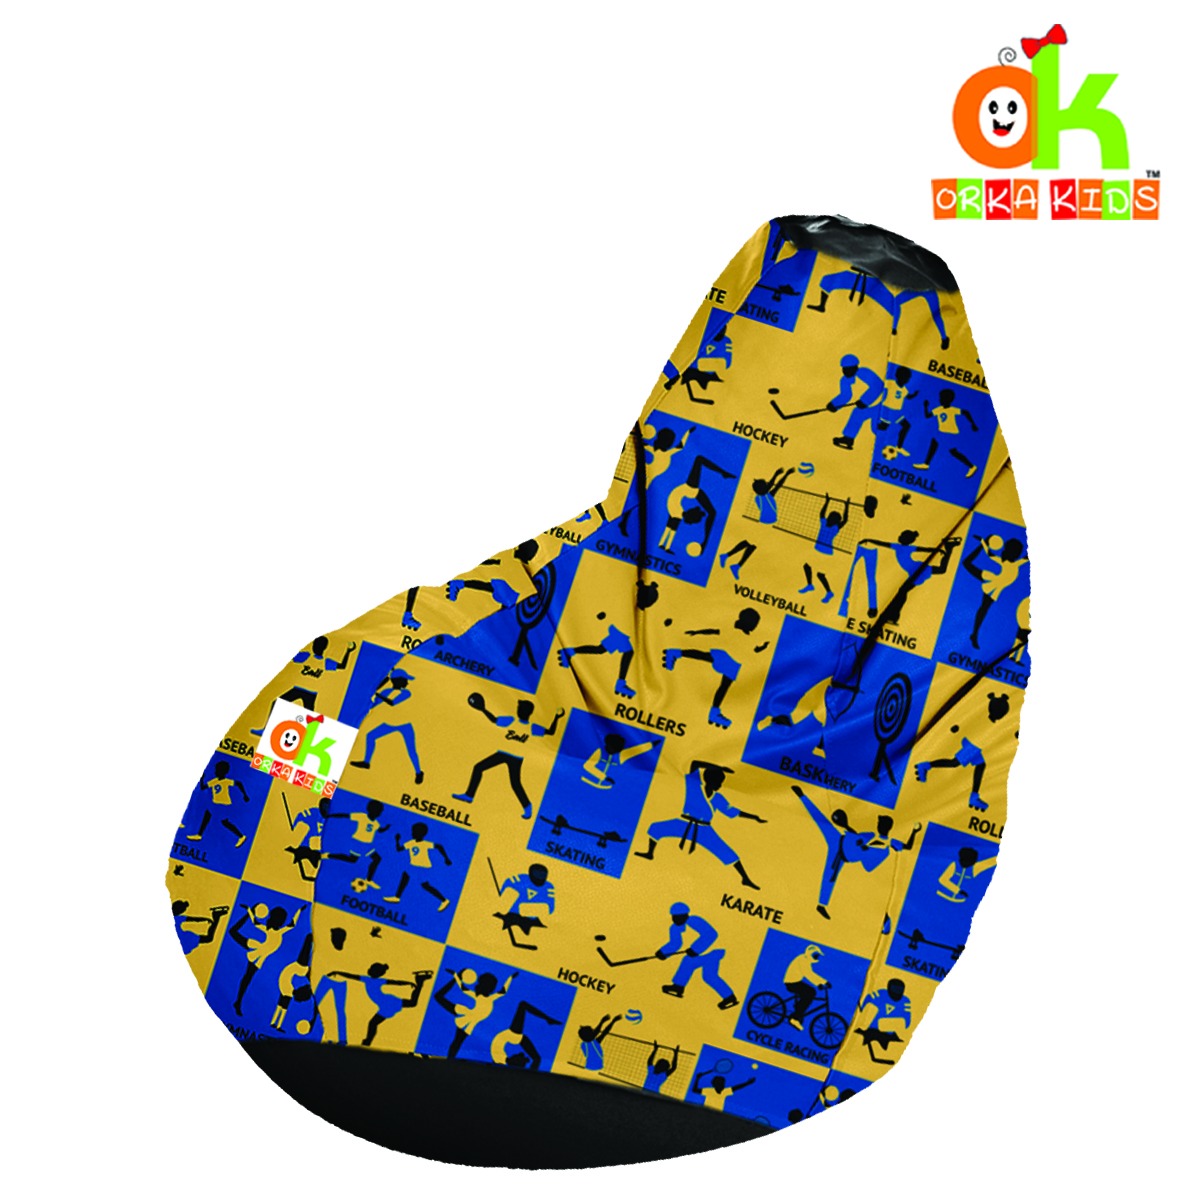 ORKA Kids Digital Printed Bean Bag With Beans Filled_Gold Blue